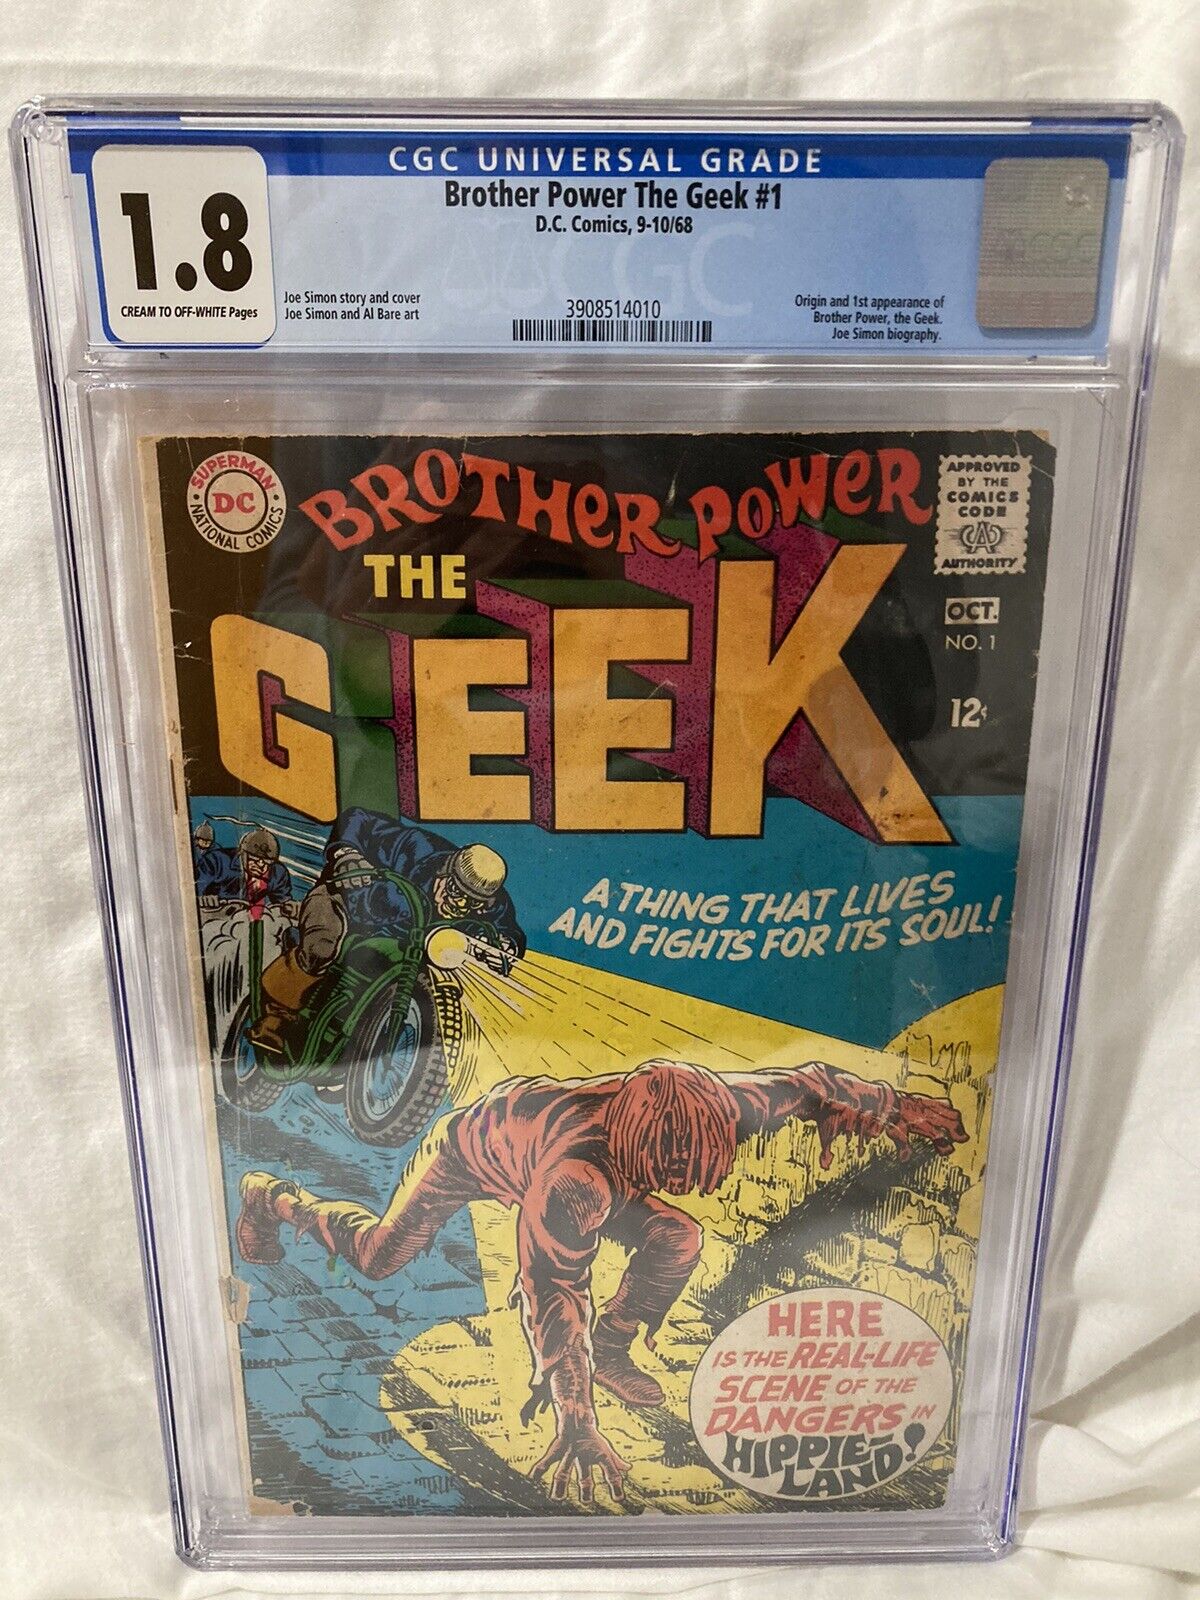 Brother Power The Geek #1 (September-October 1968, D.C.) Rare, CGC Graded (1.8)